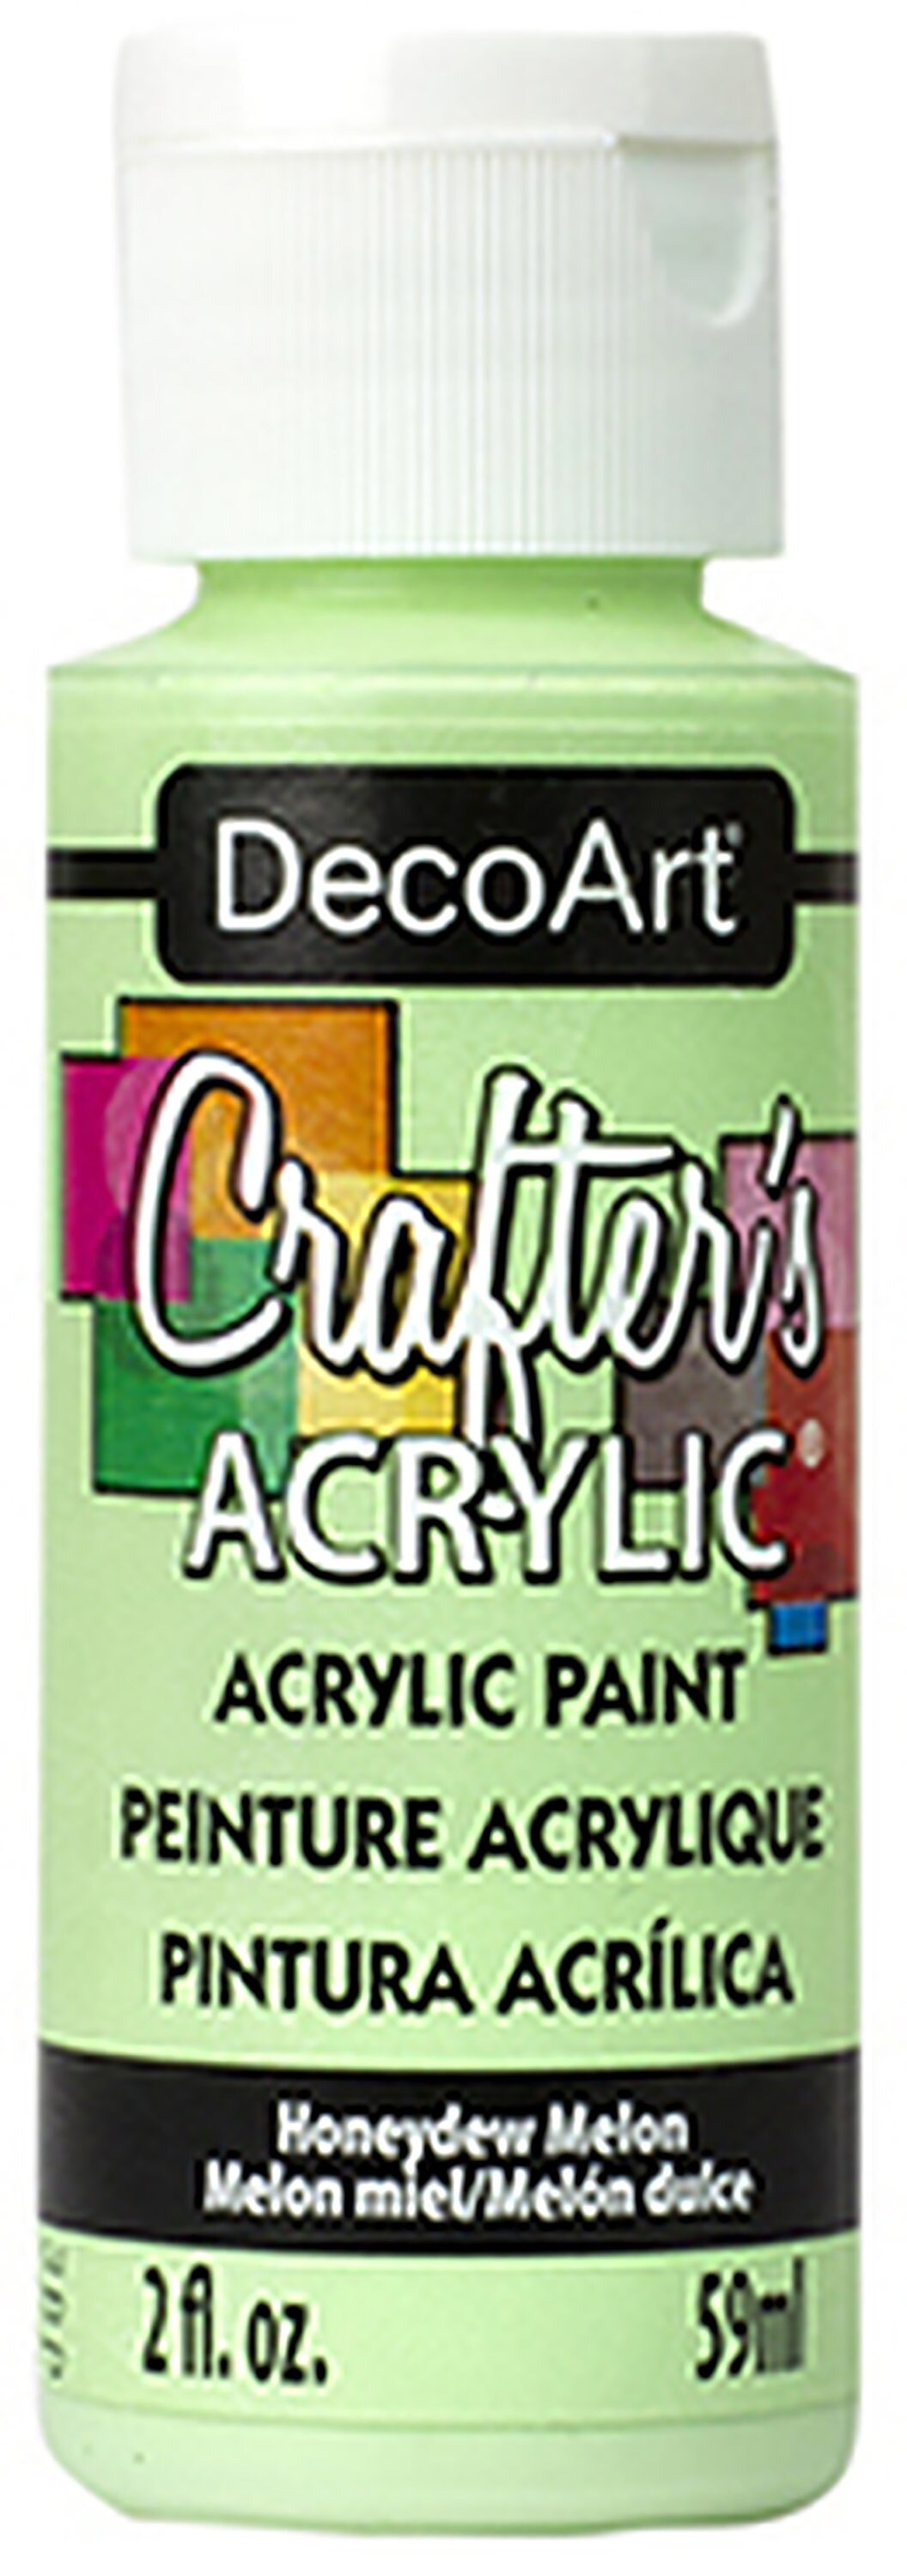 Decoart Crafter's Acrylic Paint 2oz Cinnamon Brown, 1 - Kroger